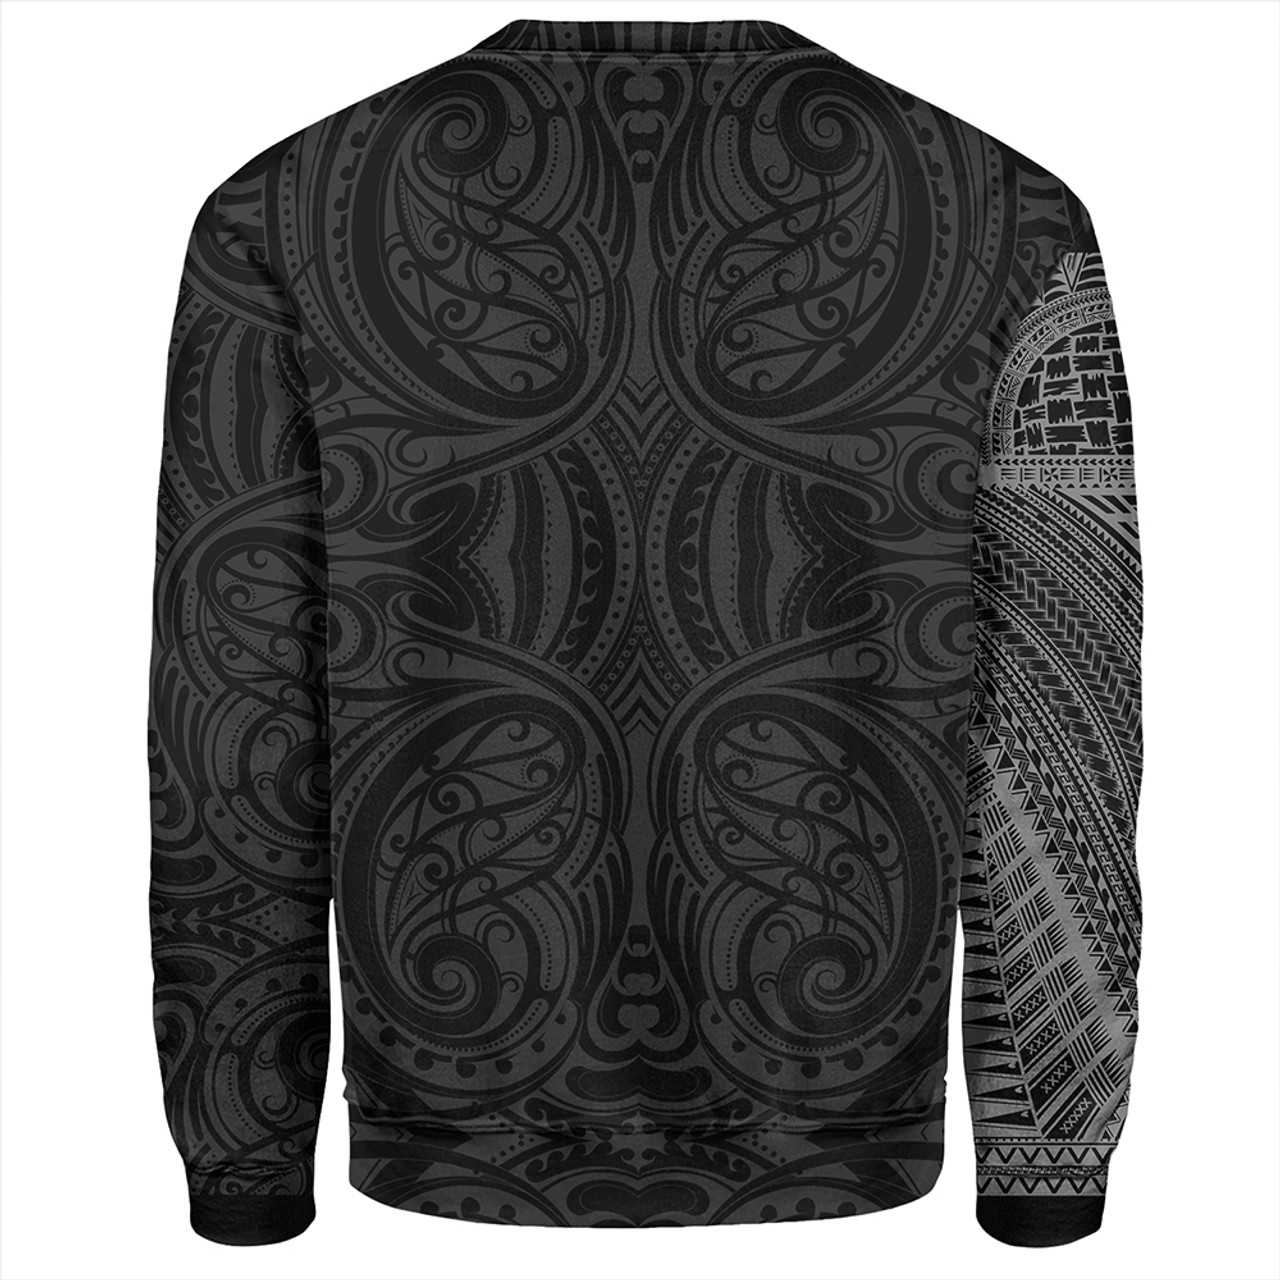 Samoa Tribal Maori Tattoo Roman Reigns Sweatshirt Gray